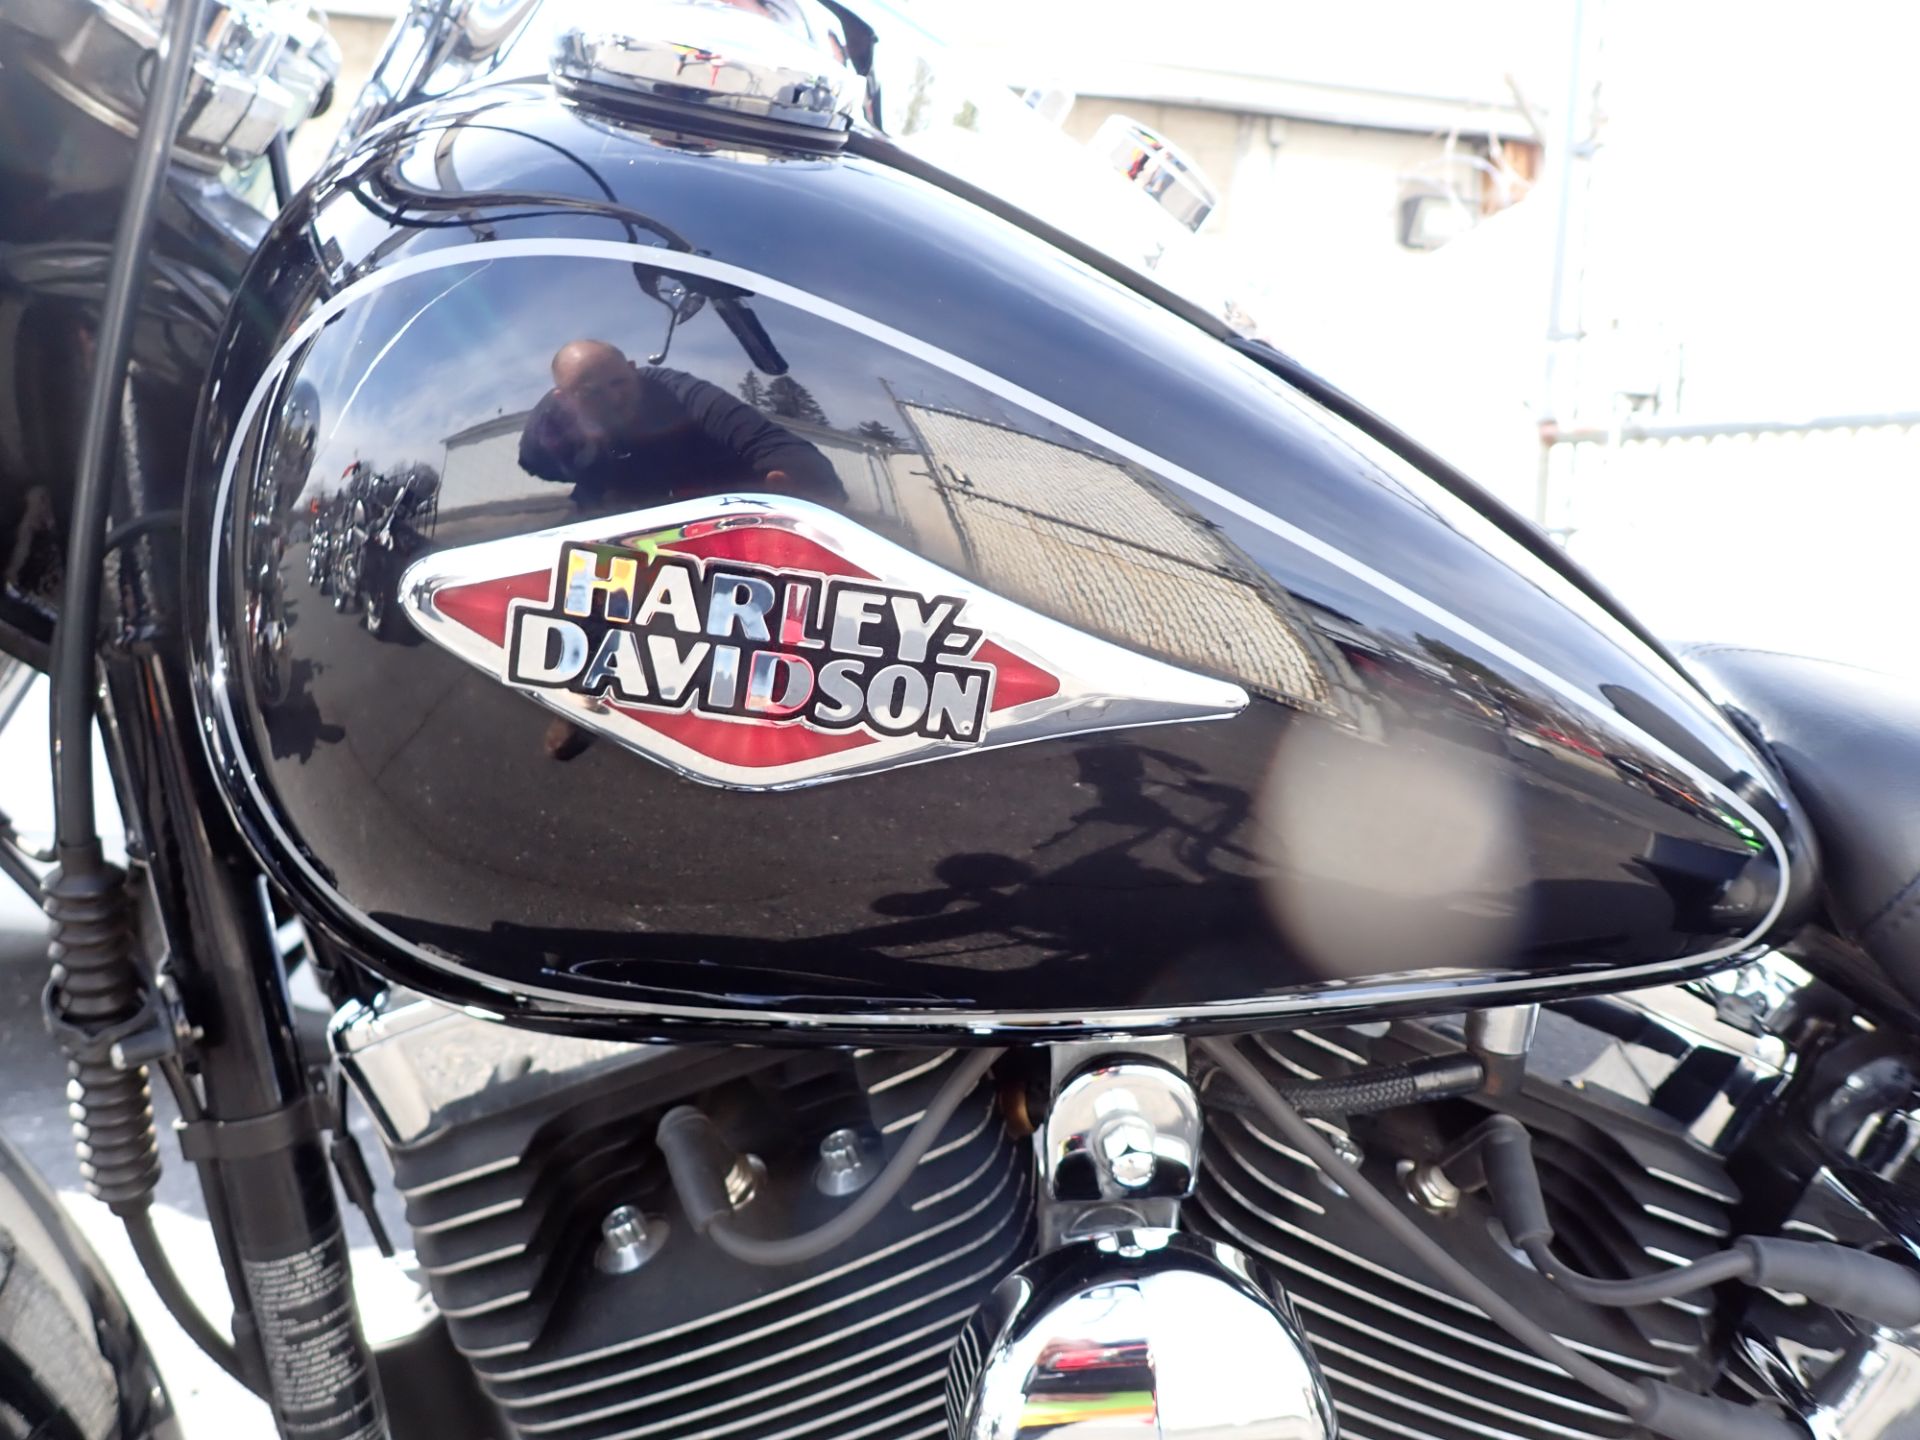 2014 Harley-Davidson Heritage Softail® Classic in Massillon, Ohio - Photo 15